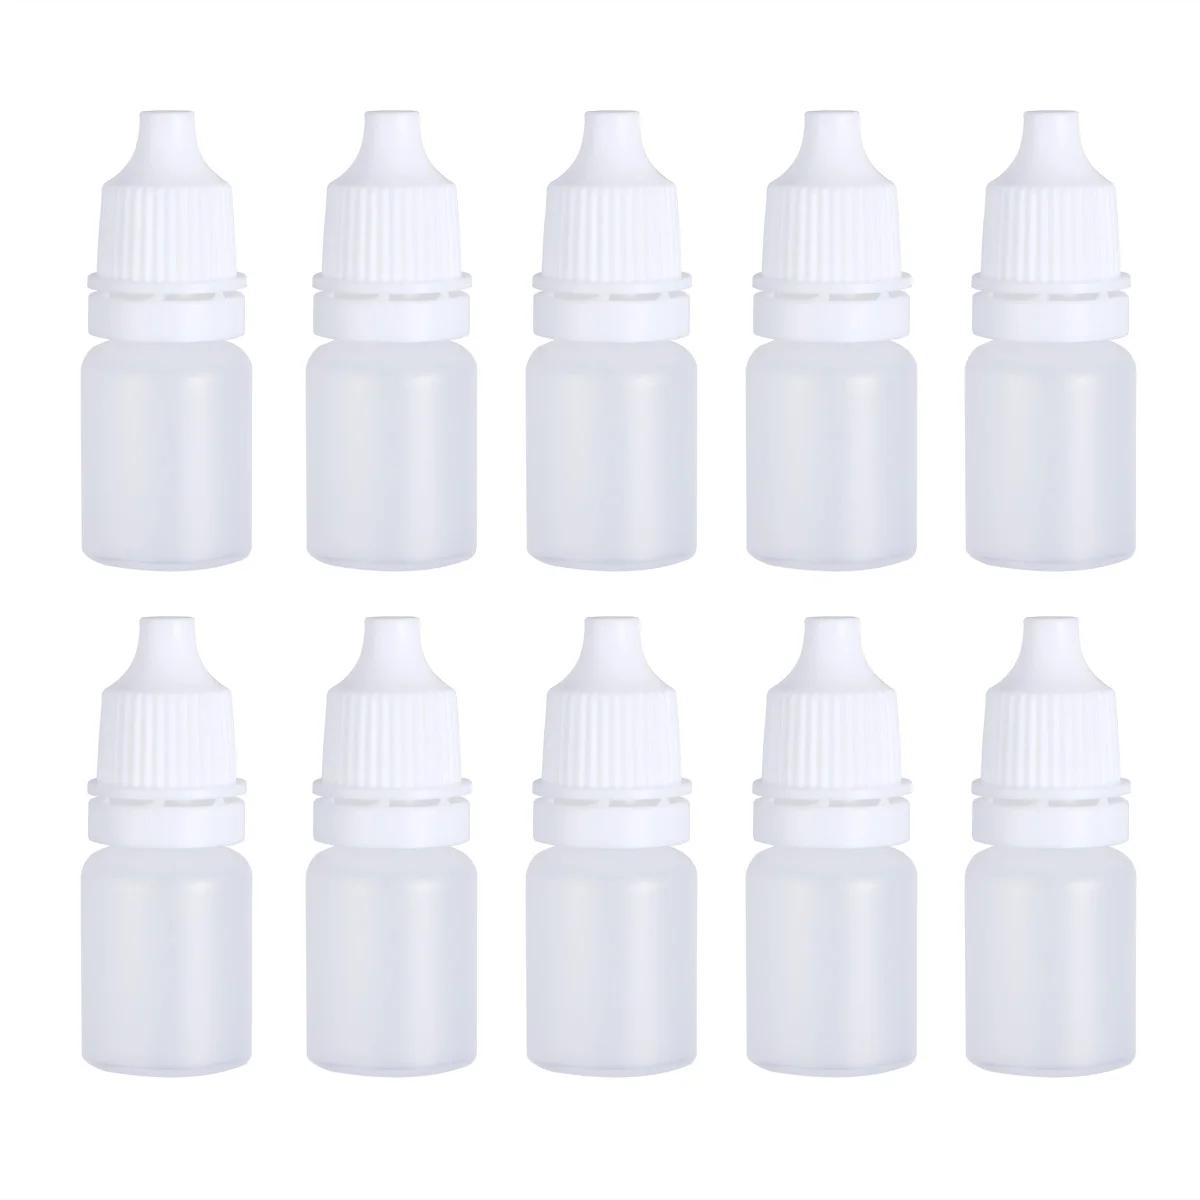 

10Pcs Squeezable Dropper Bottles 5ml Empty Eye Dropper Sample Essential Oil Container Makeup Vial